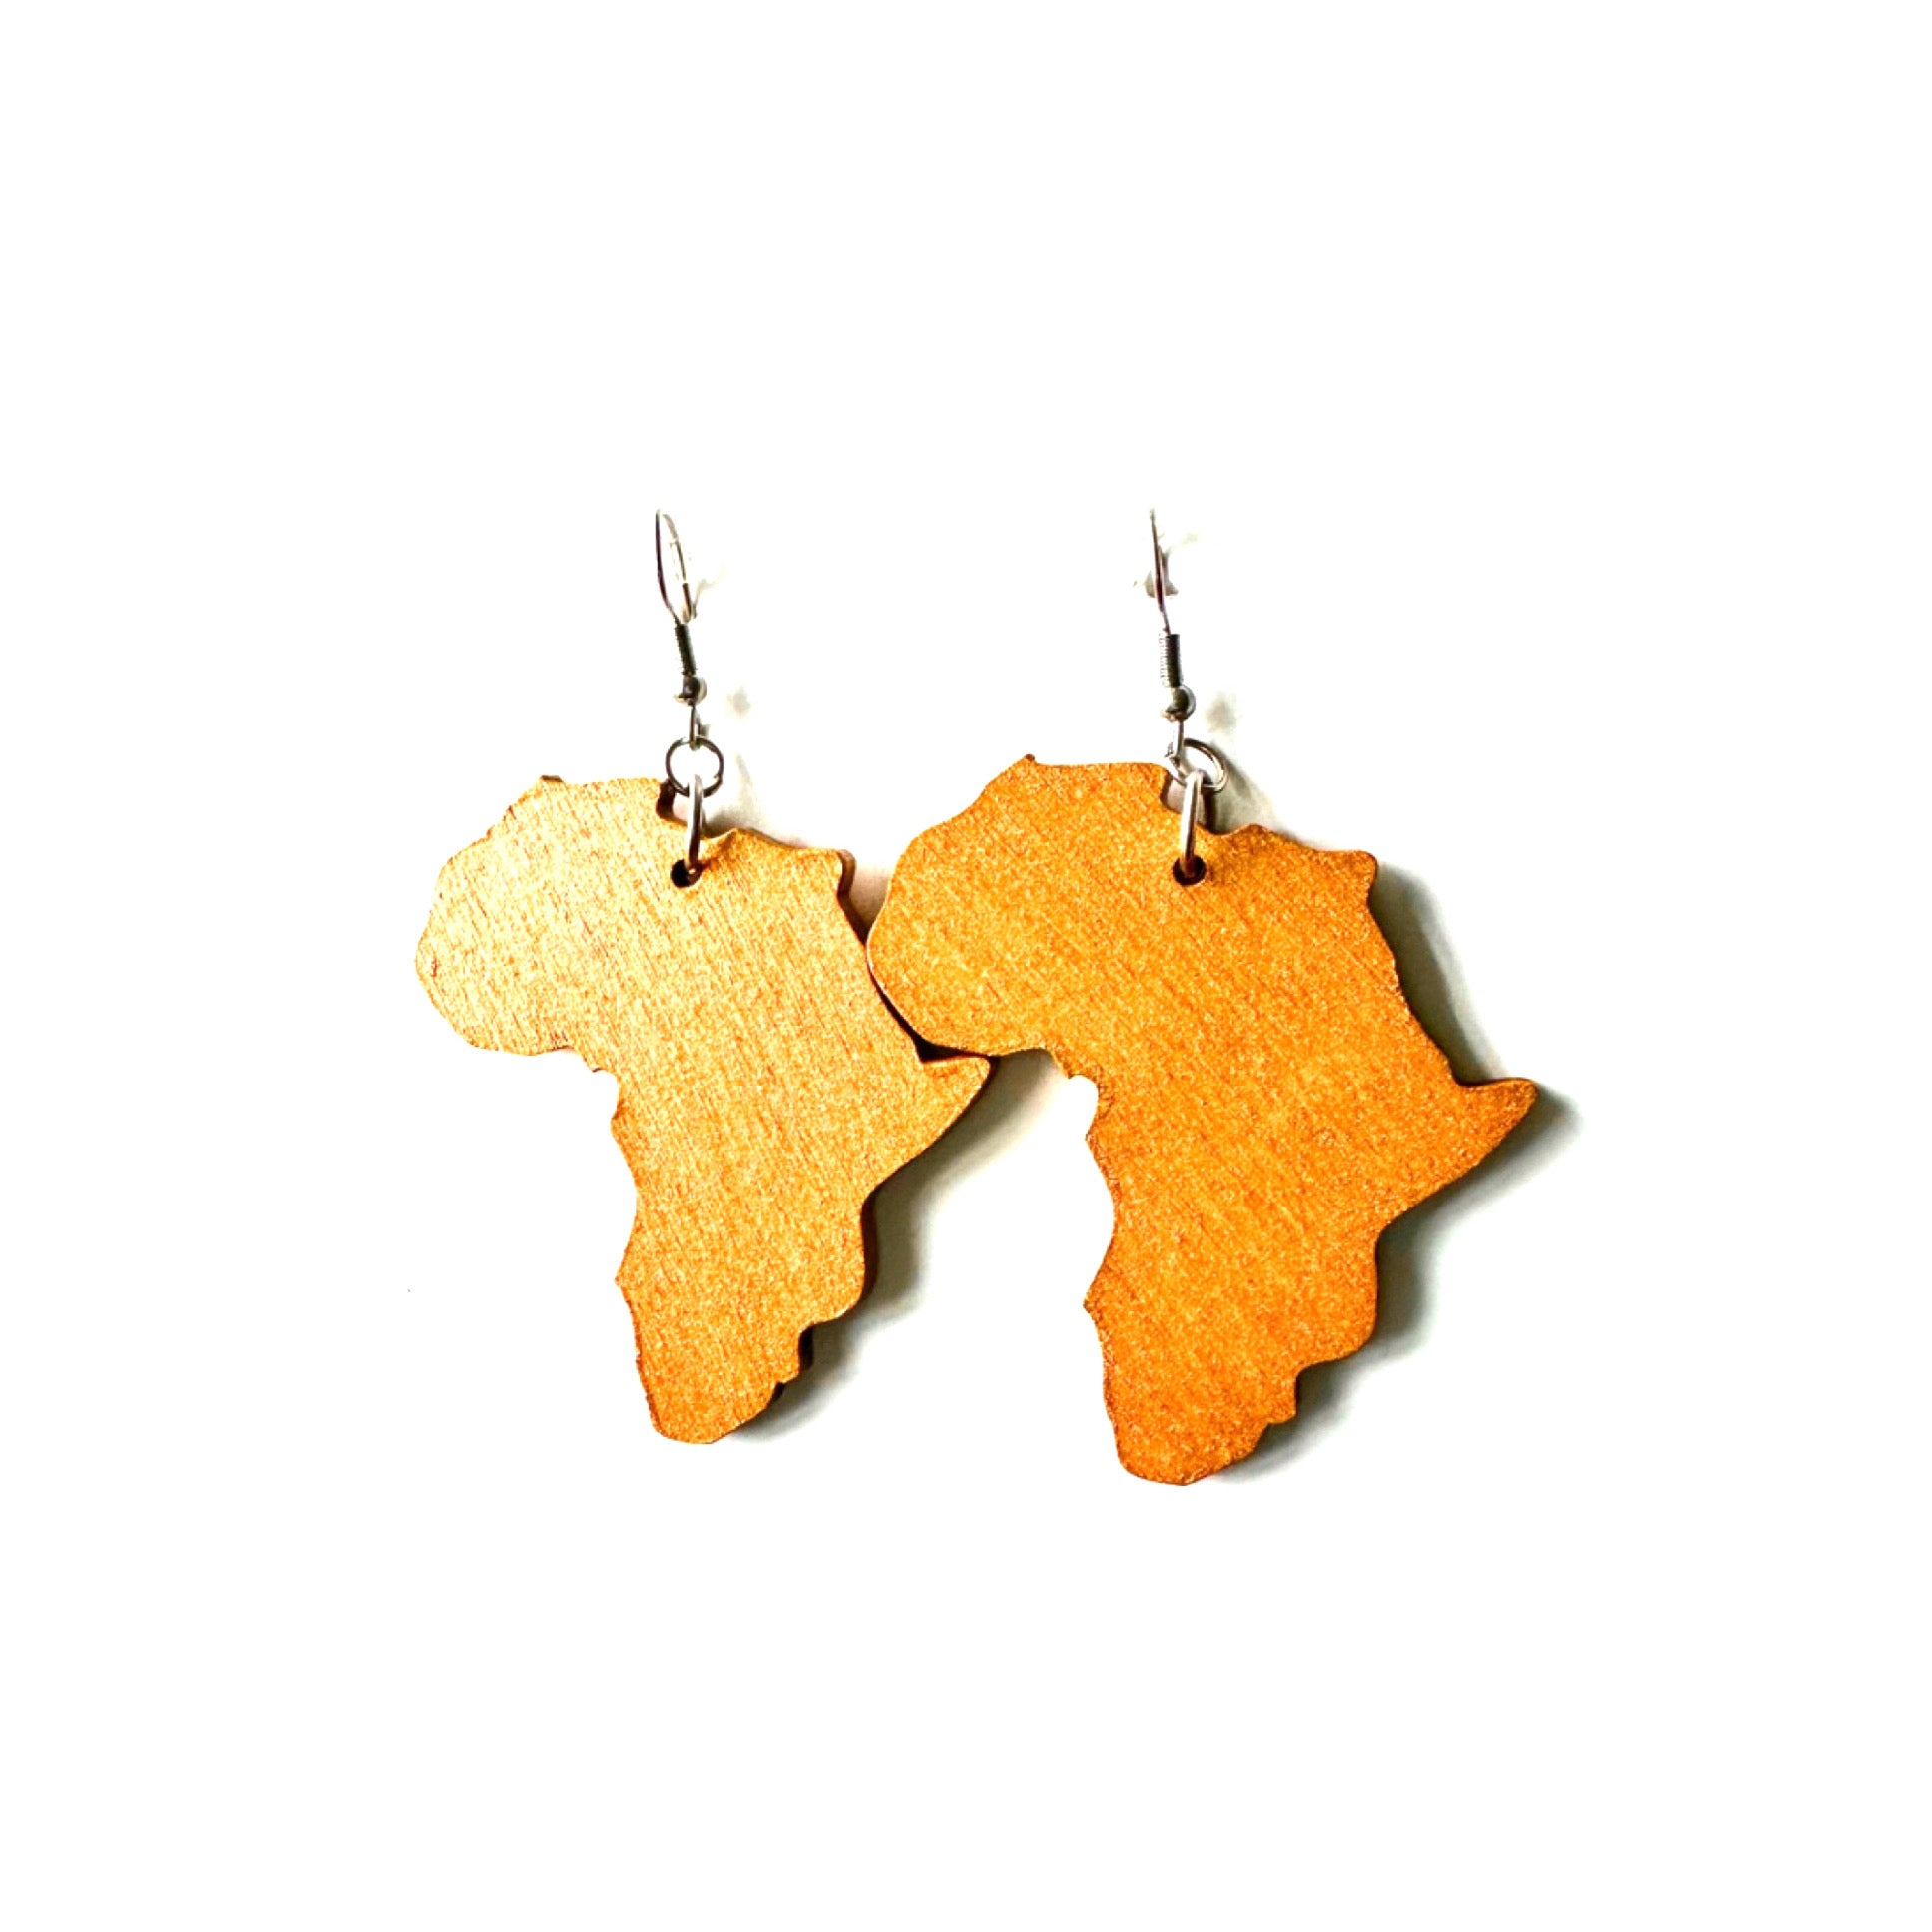 Africa Map Wood Earrings - Gold